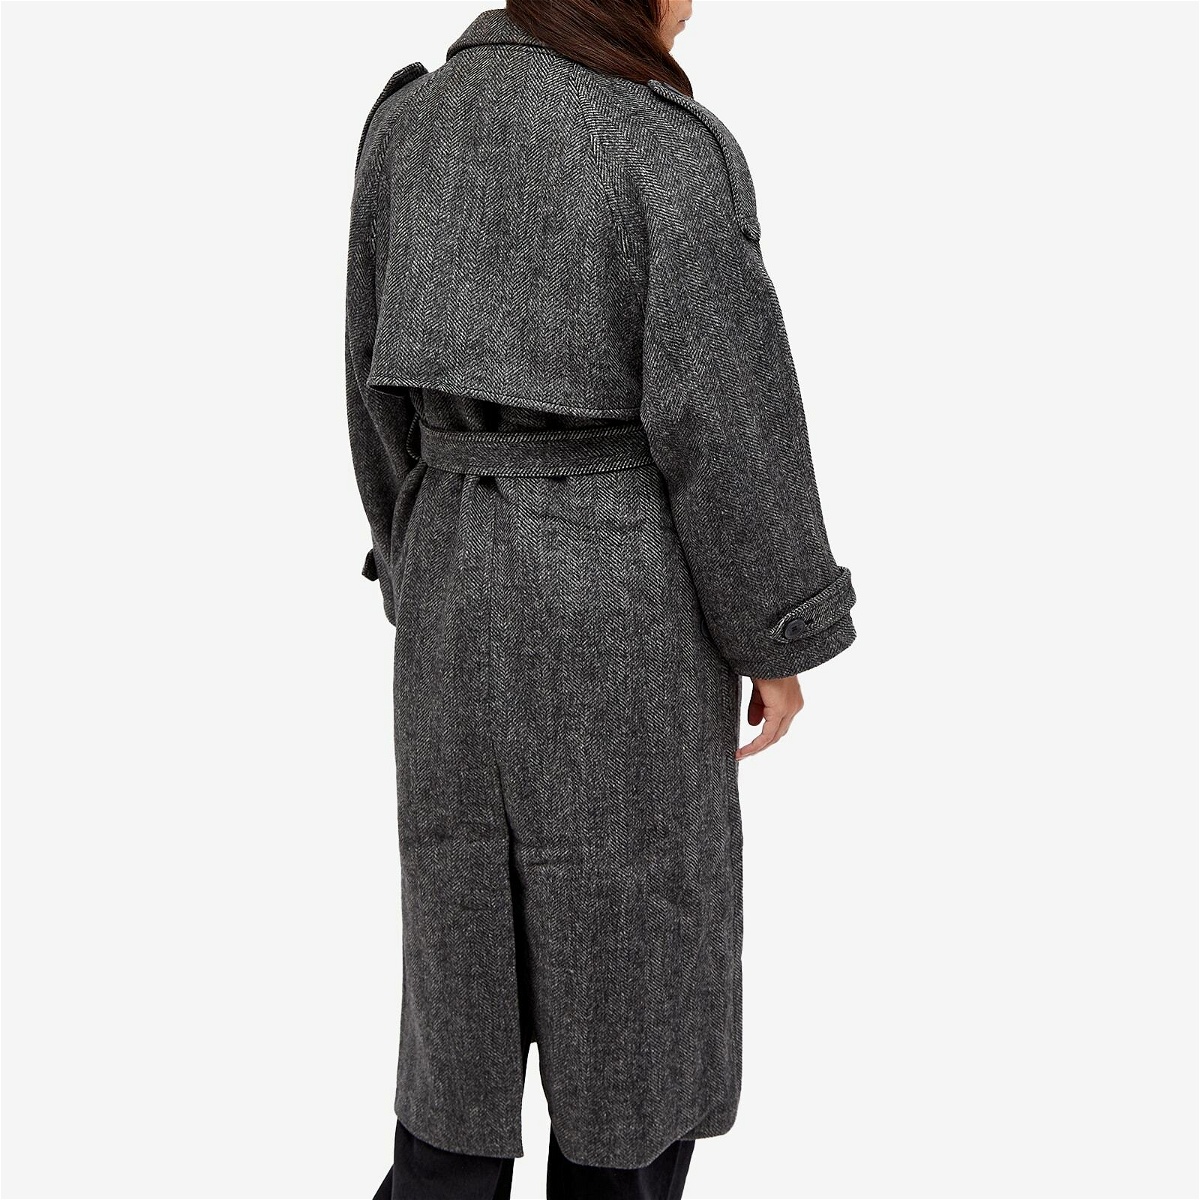 Meotine Women's Bea Wool Coat in Herringbone/Black/Grey